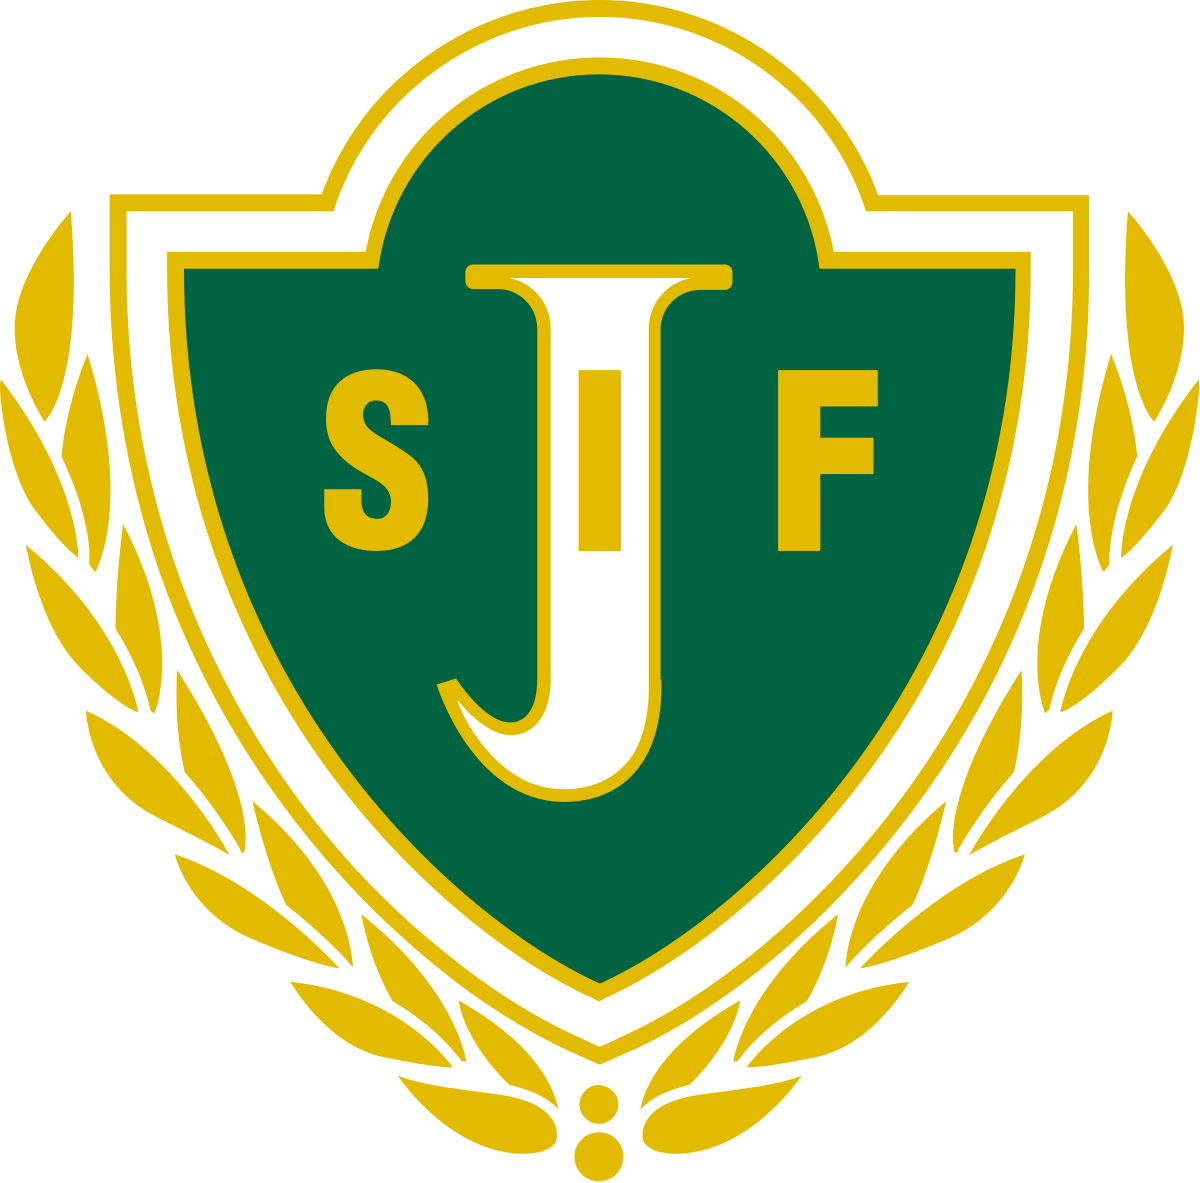 Jönköpings Södra emblem